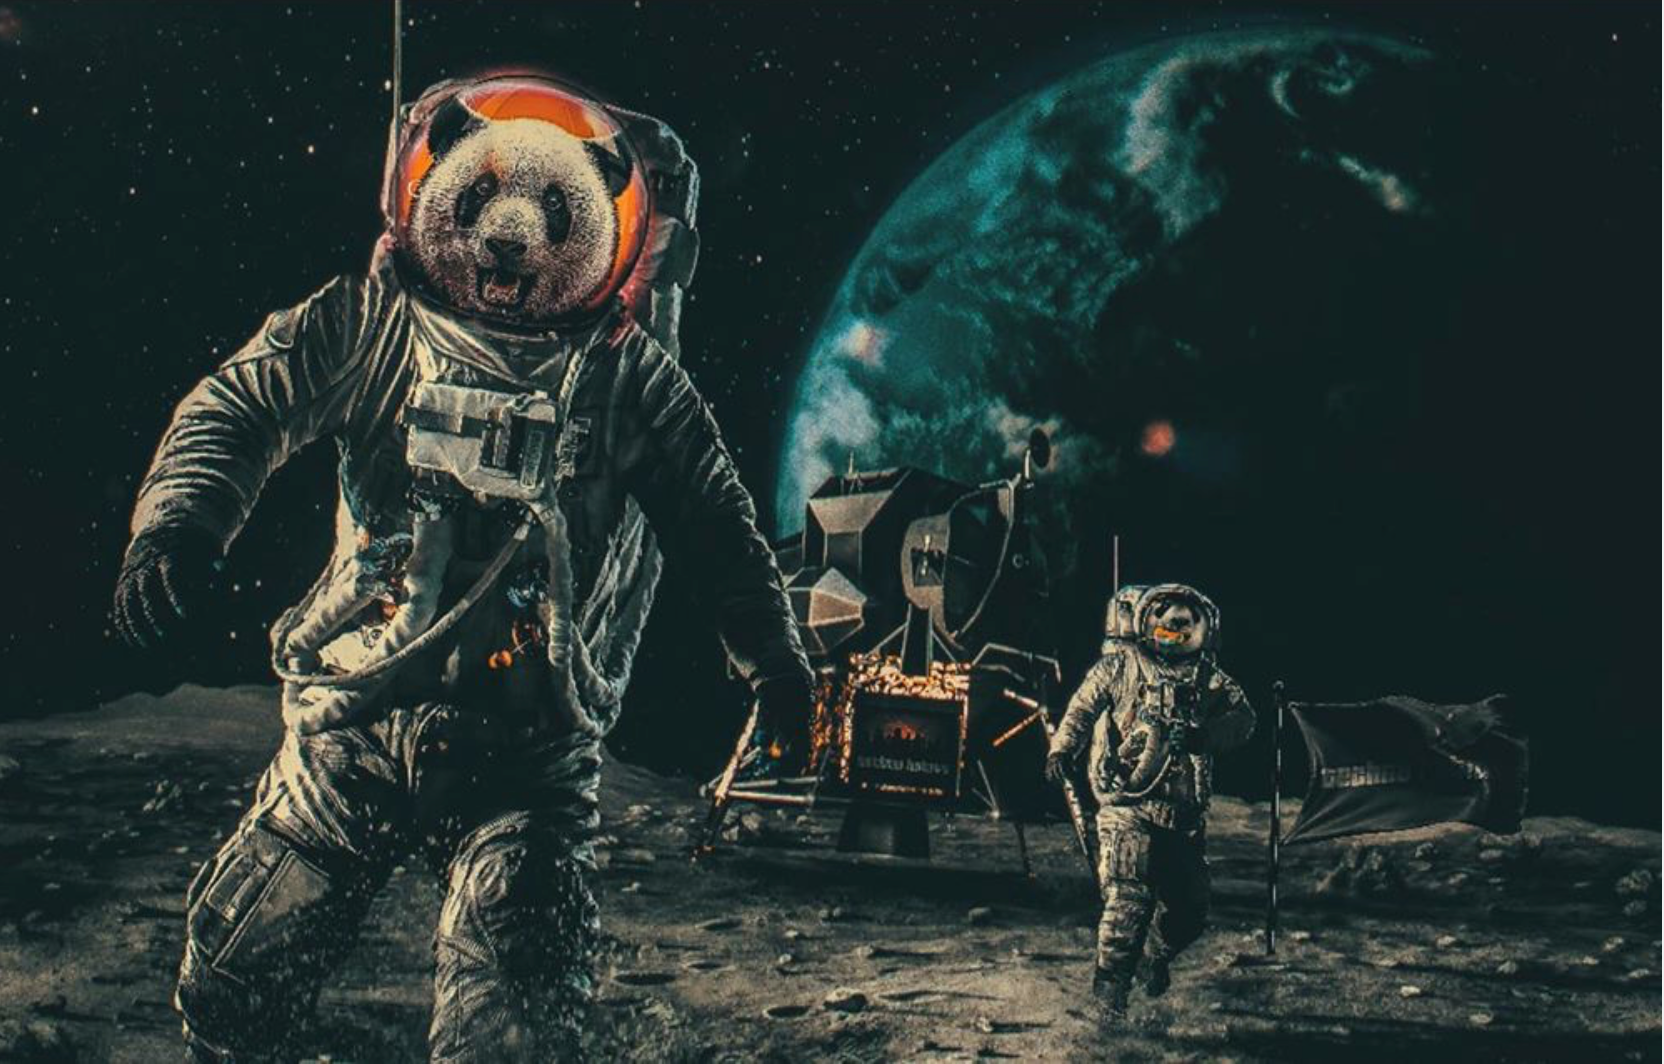 ᴍᴀʀɪɴᴏs_sᴛ - Animals in space